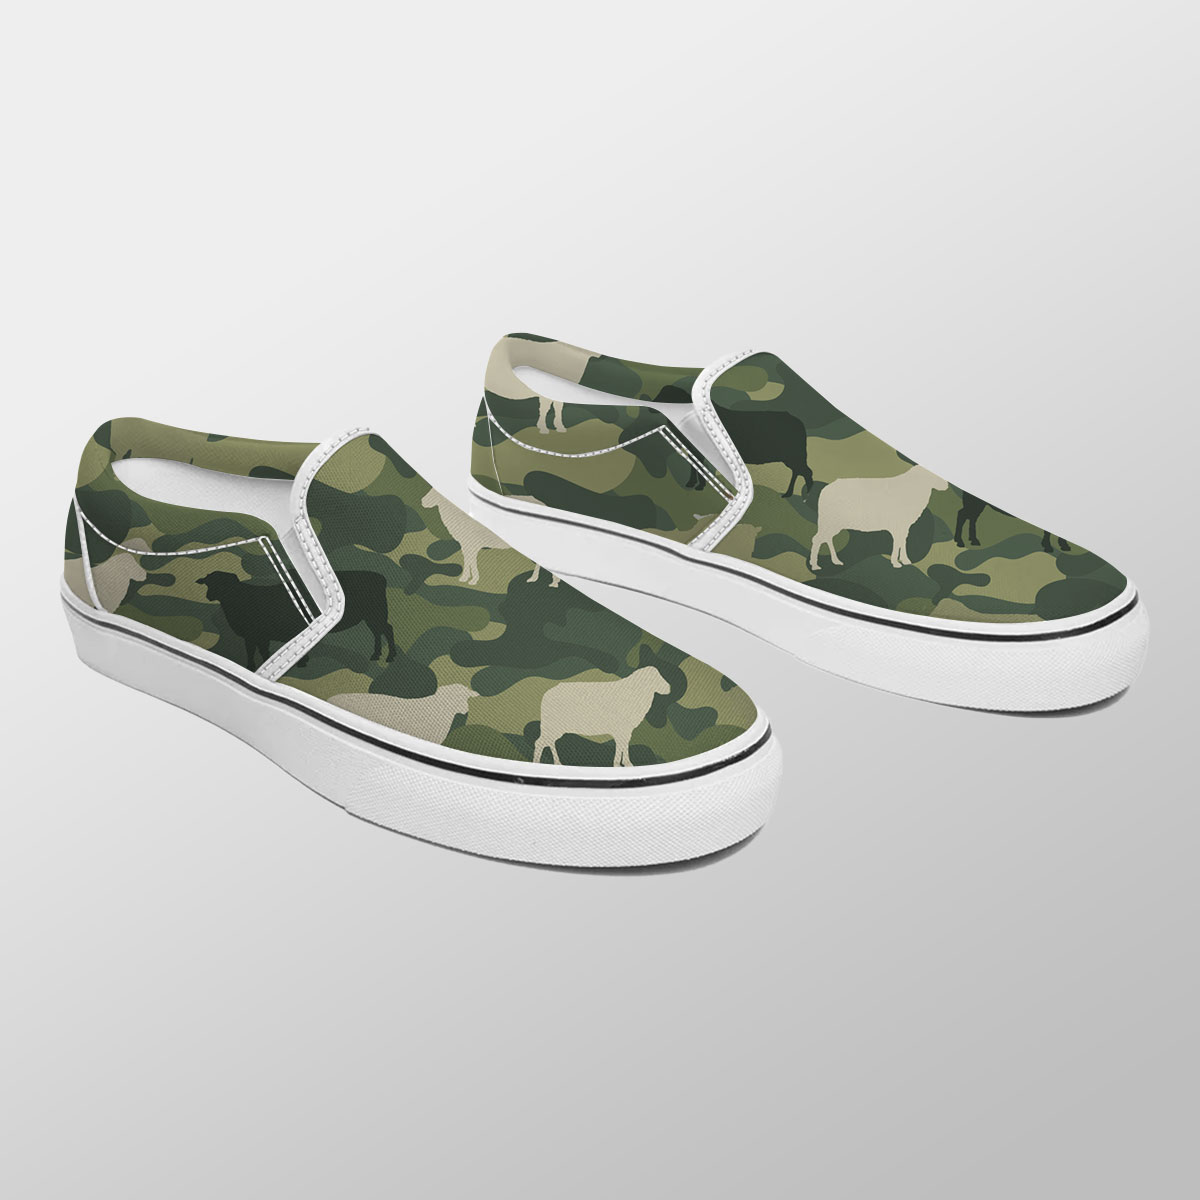 Sheep Camo Pattern Slip On Sneakers